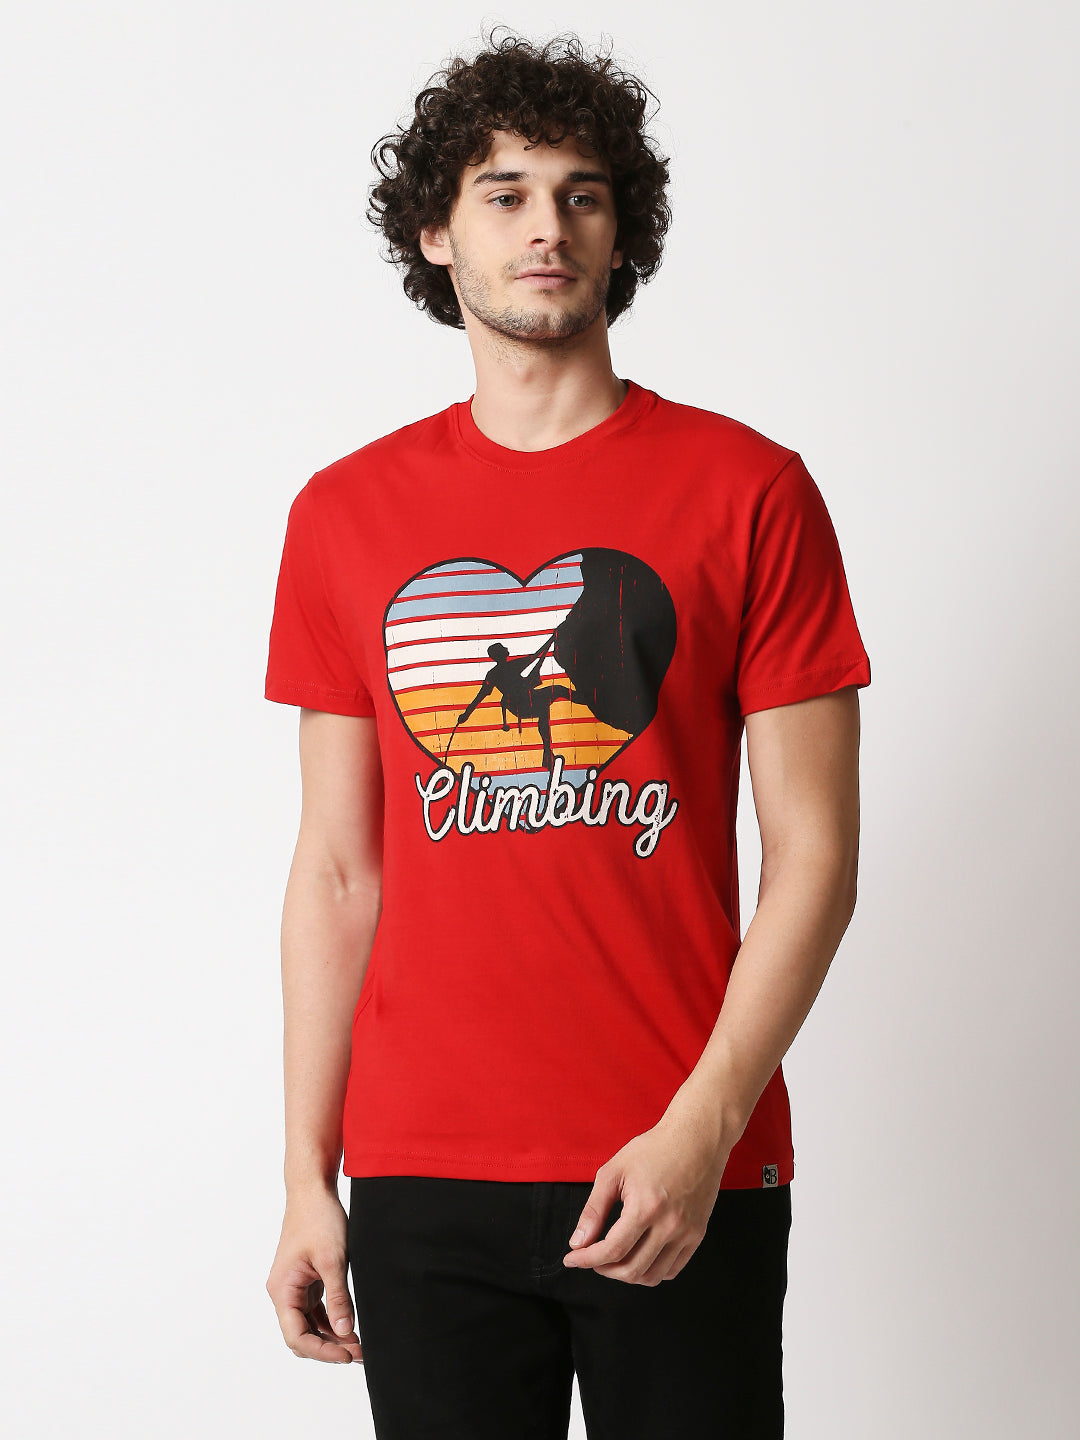 Buy Men's CHERRY RED Regular fit Chest print T-shirt